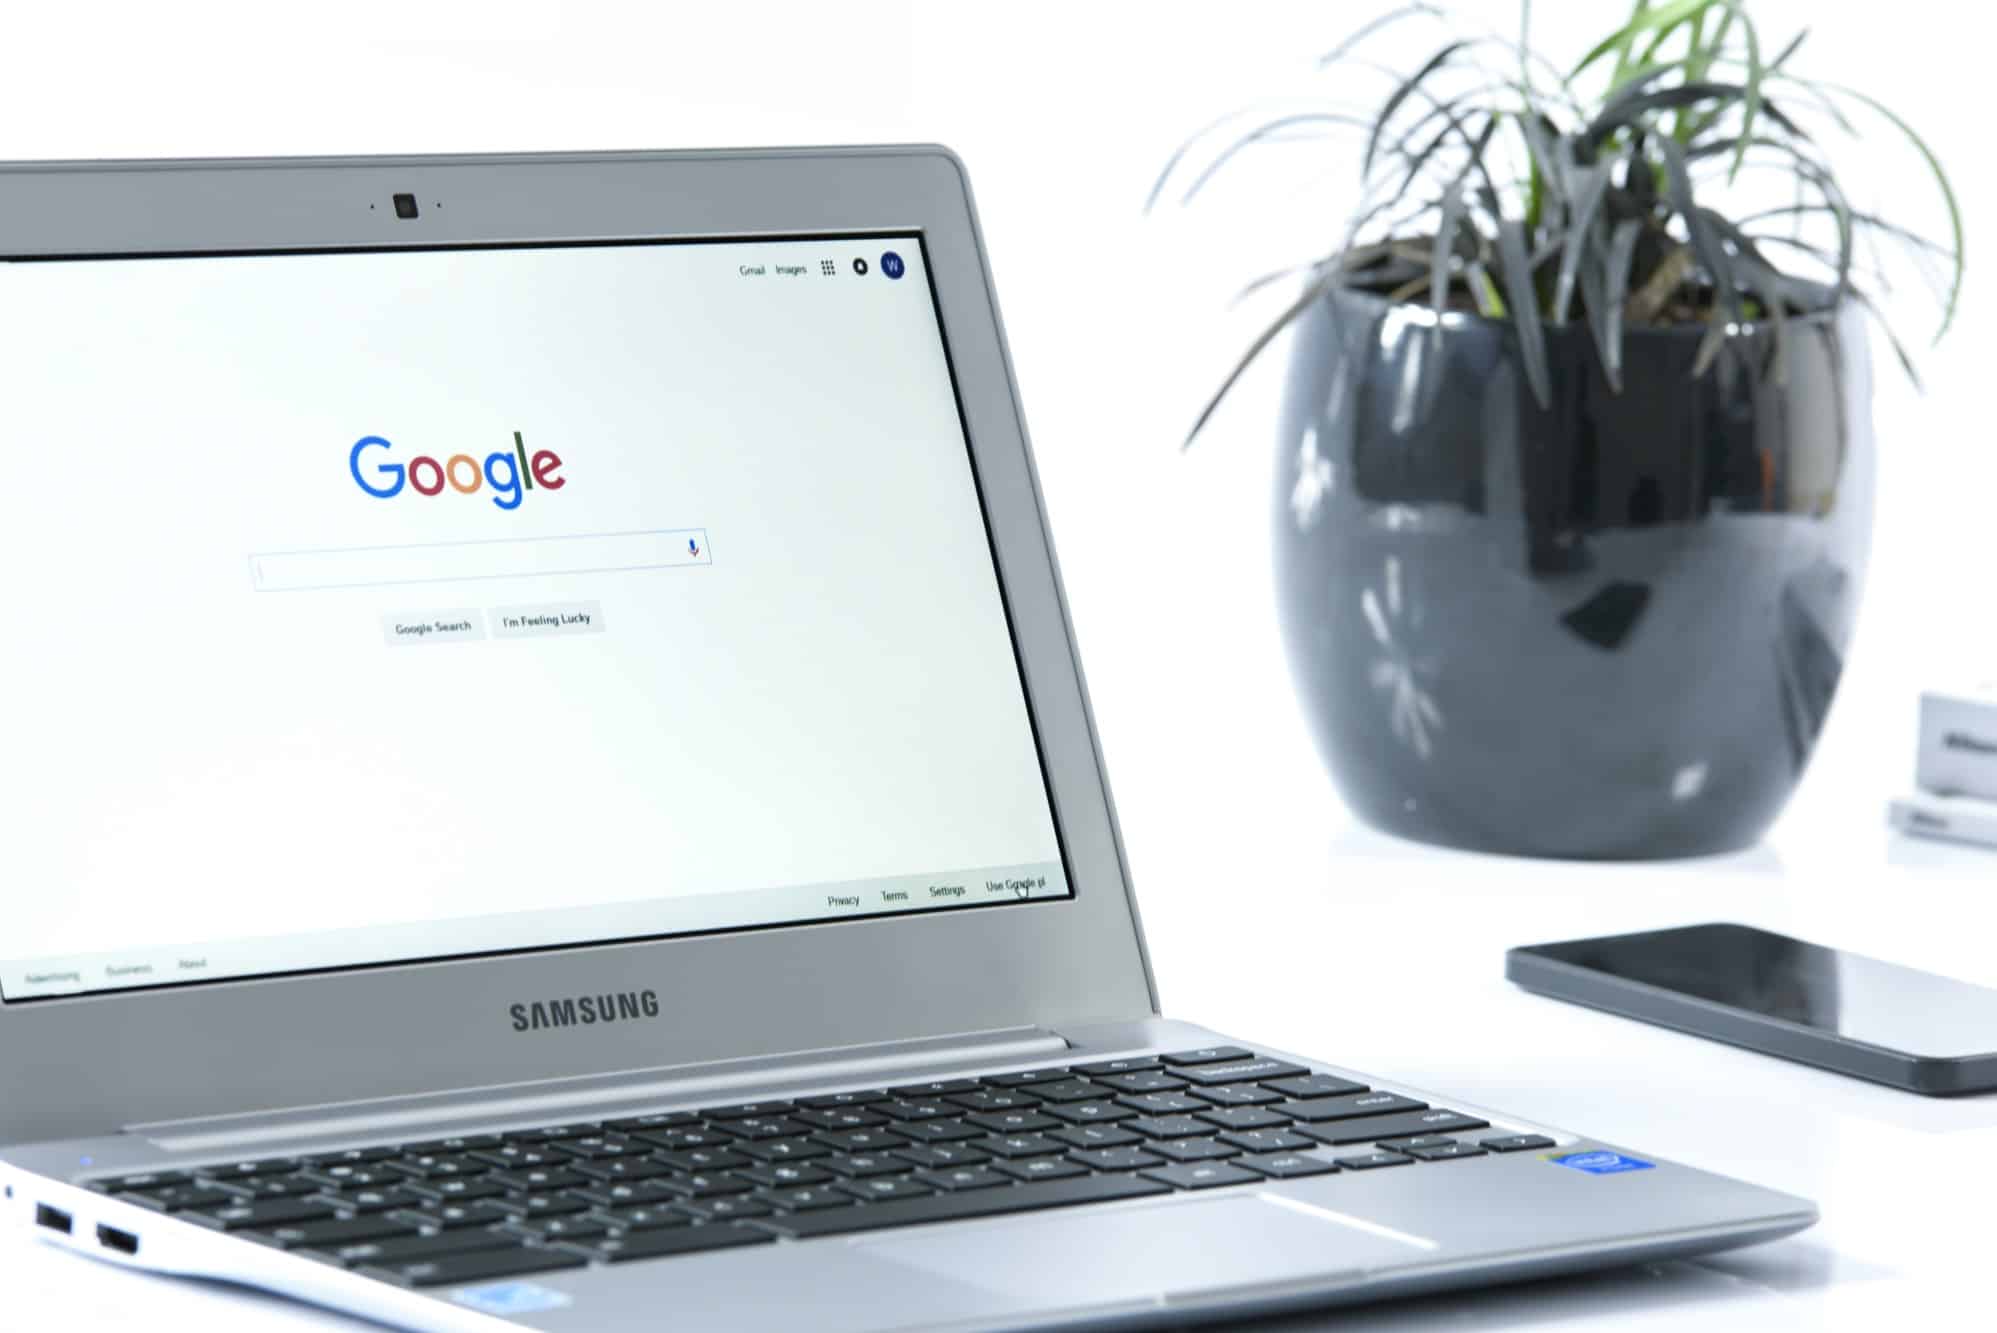 Internet Search Engine - Google